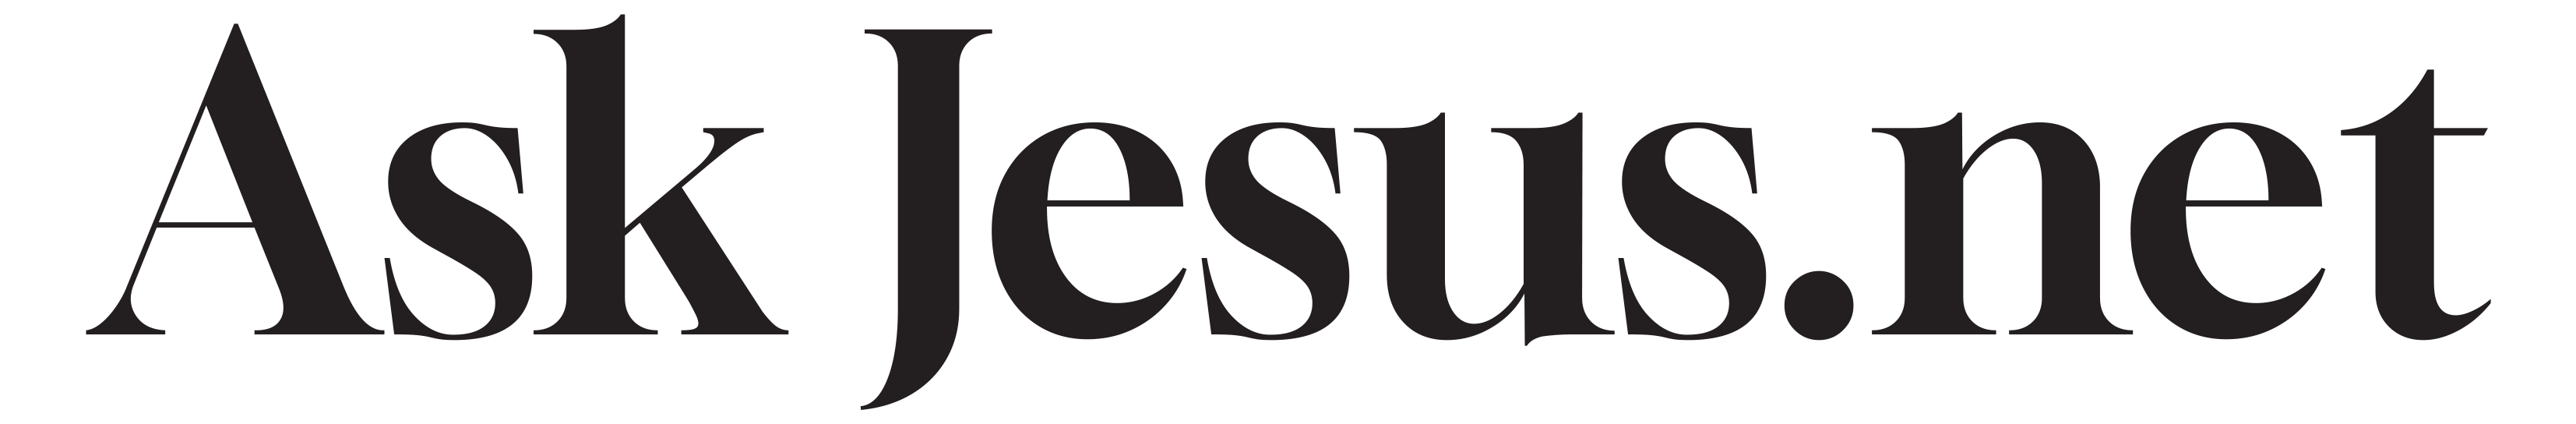 Logo-AskJesusnet-black